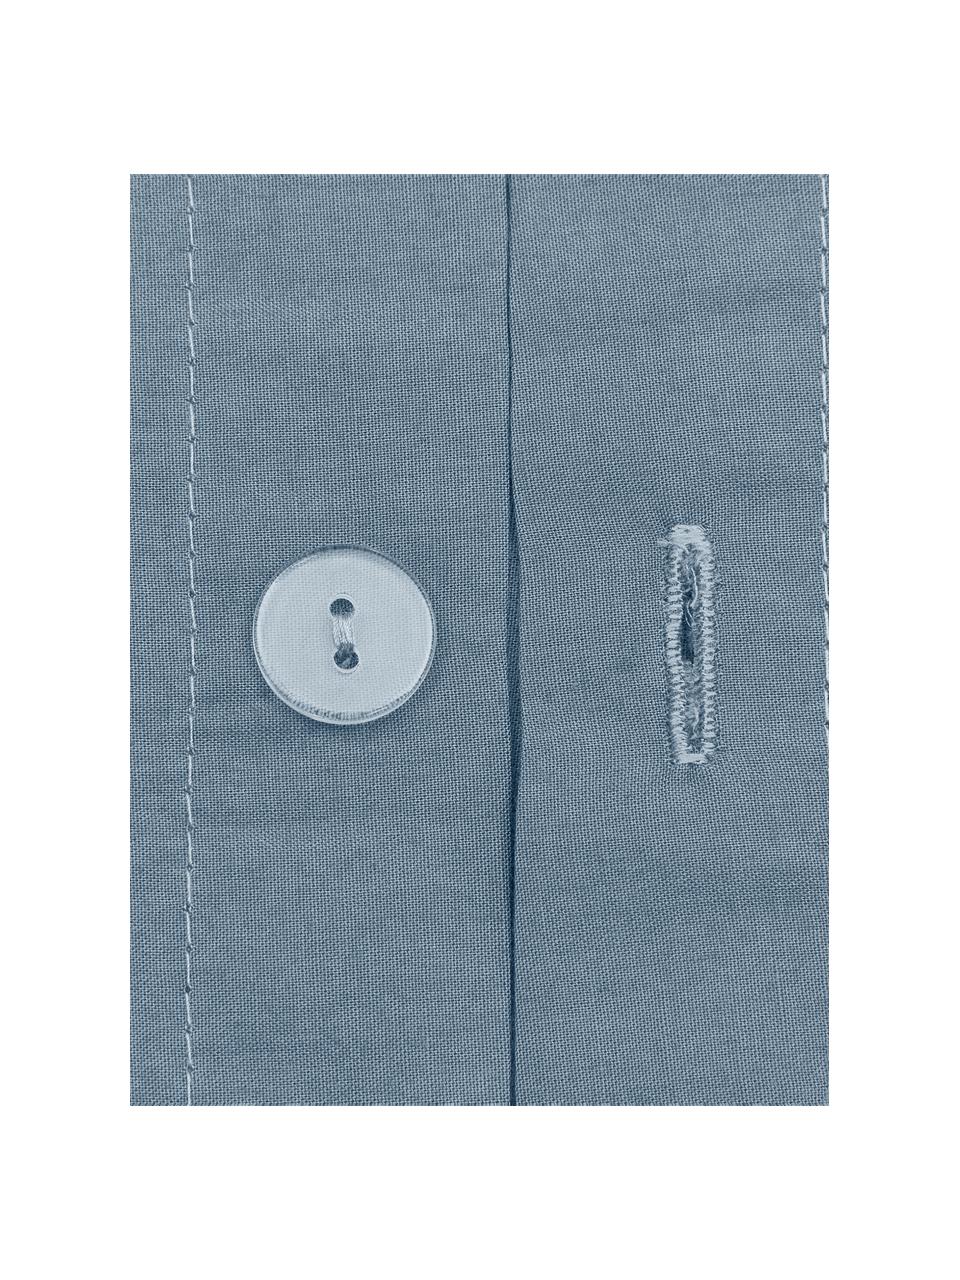 Poszewka na poduszkę z perkalu Elsie, 2 szt., Niebieski, S 40 x D 80 cm